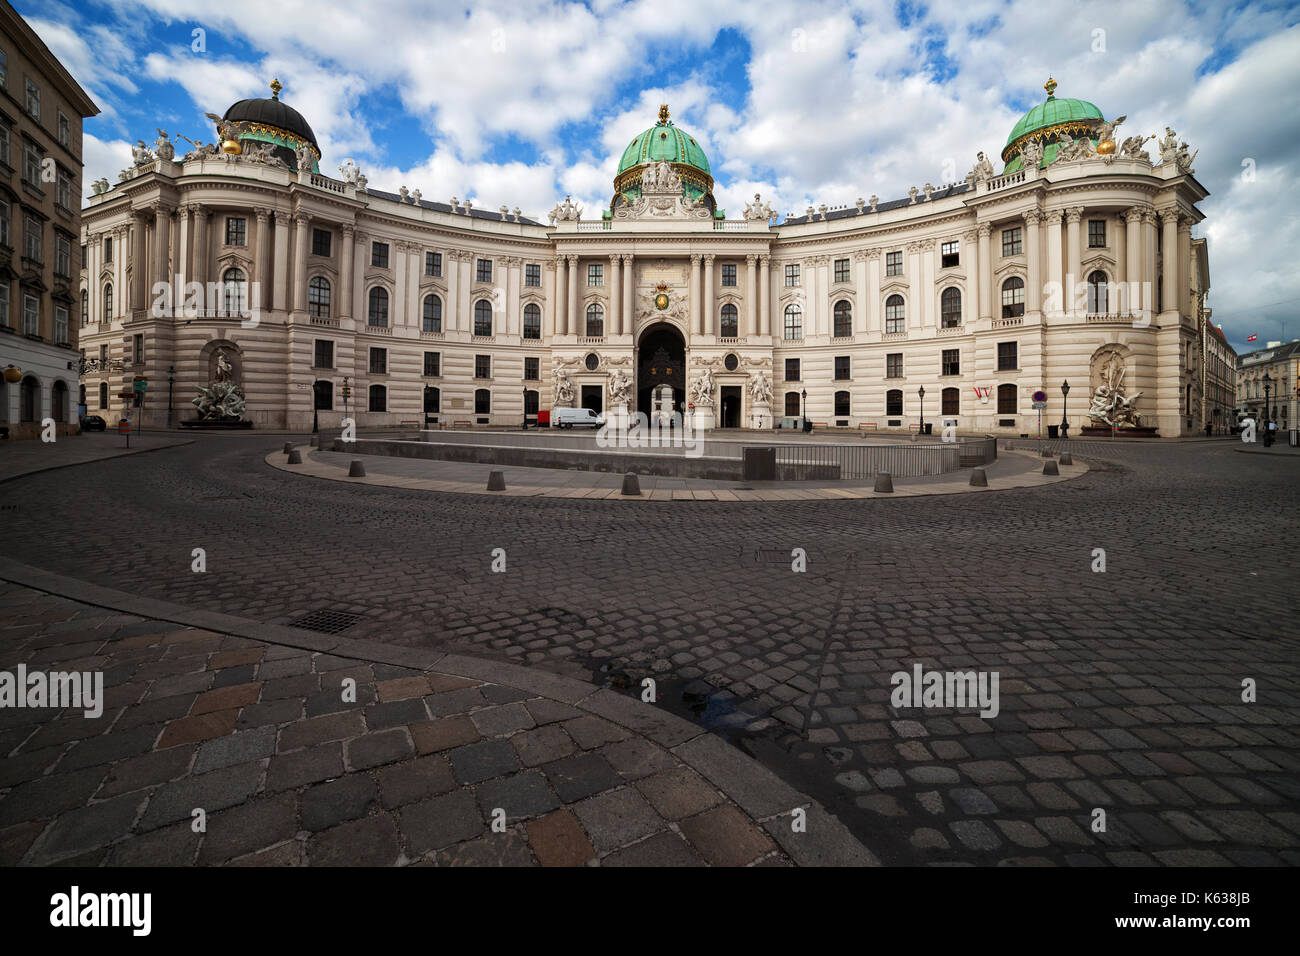 Austria, Vienna, Hofburg Palace, Michaelertrakt - St. Michael's Wing and Michaelerplatz - Saint Michael Square, city landmark Stock Photo